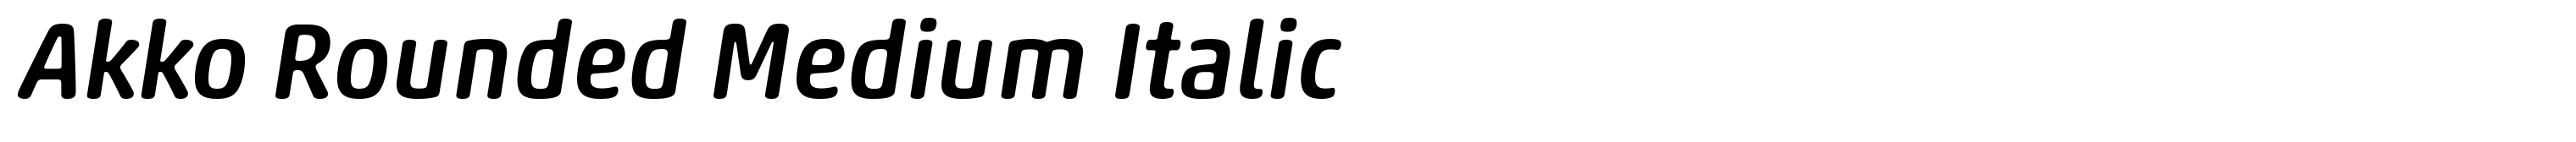 Akko Rounded Medium Italic